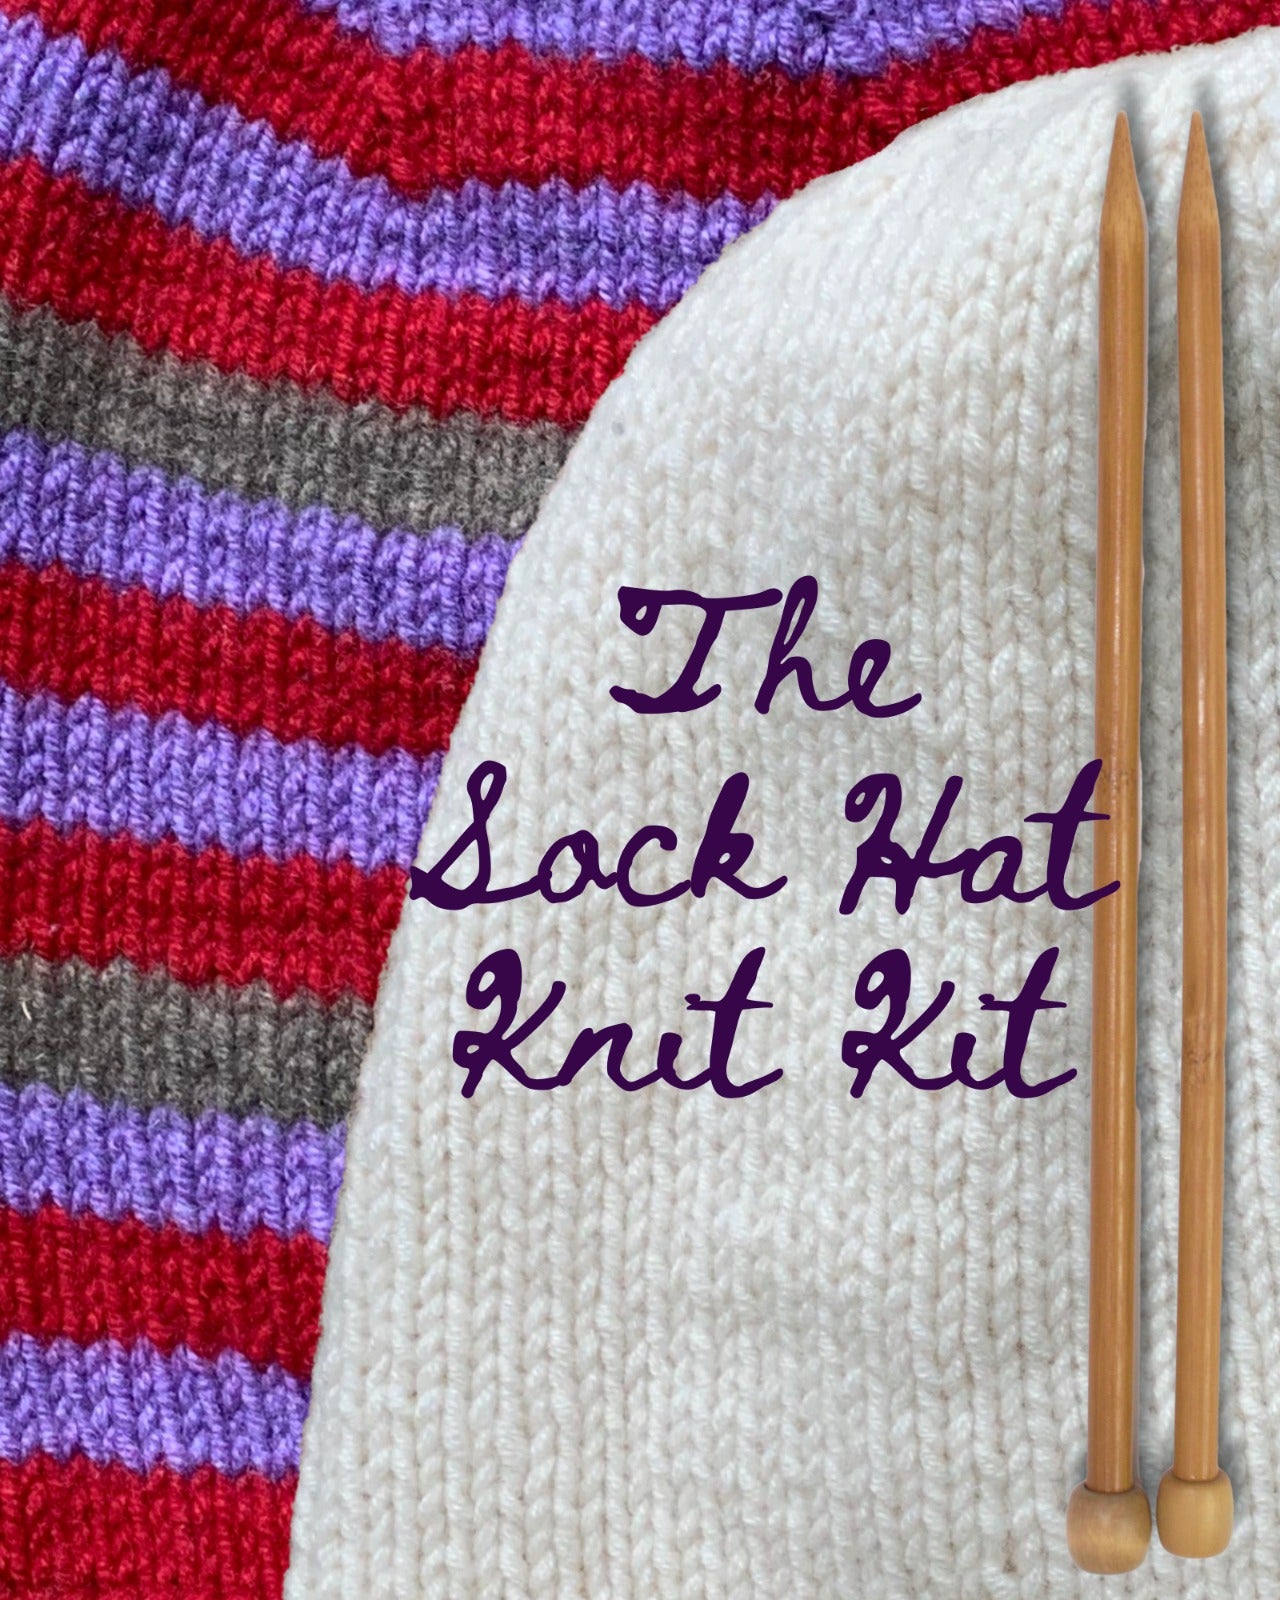 Sock Hat Knit Kit